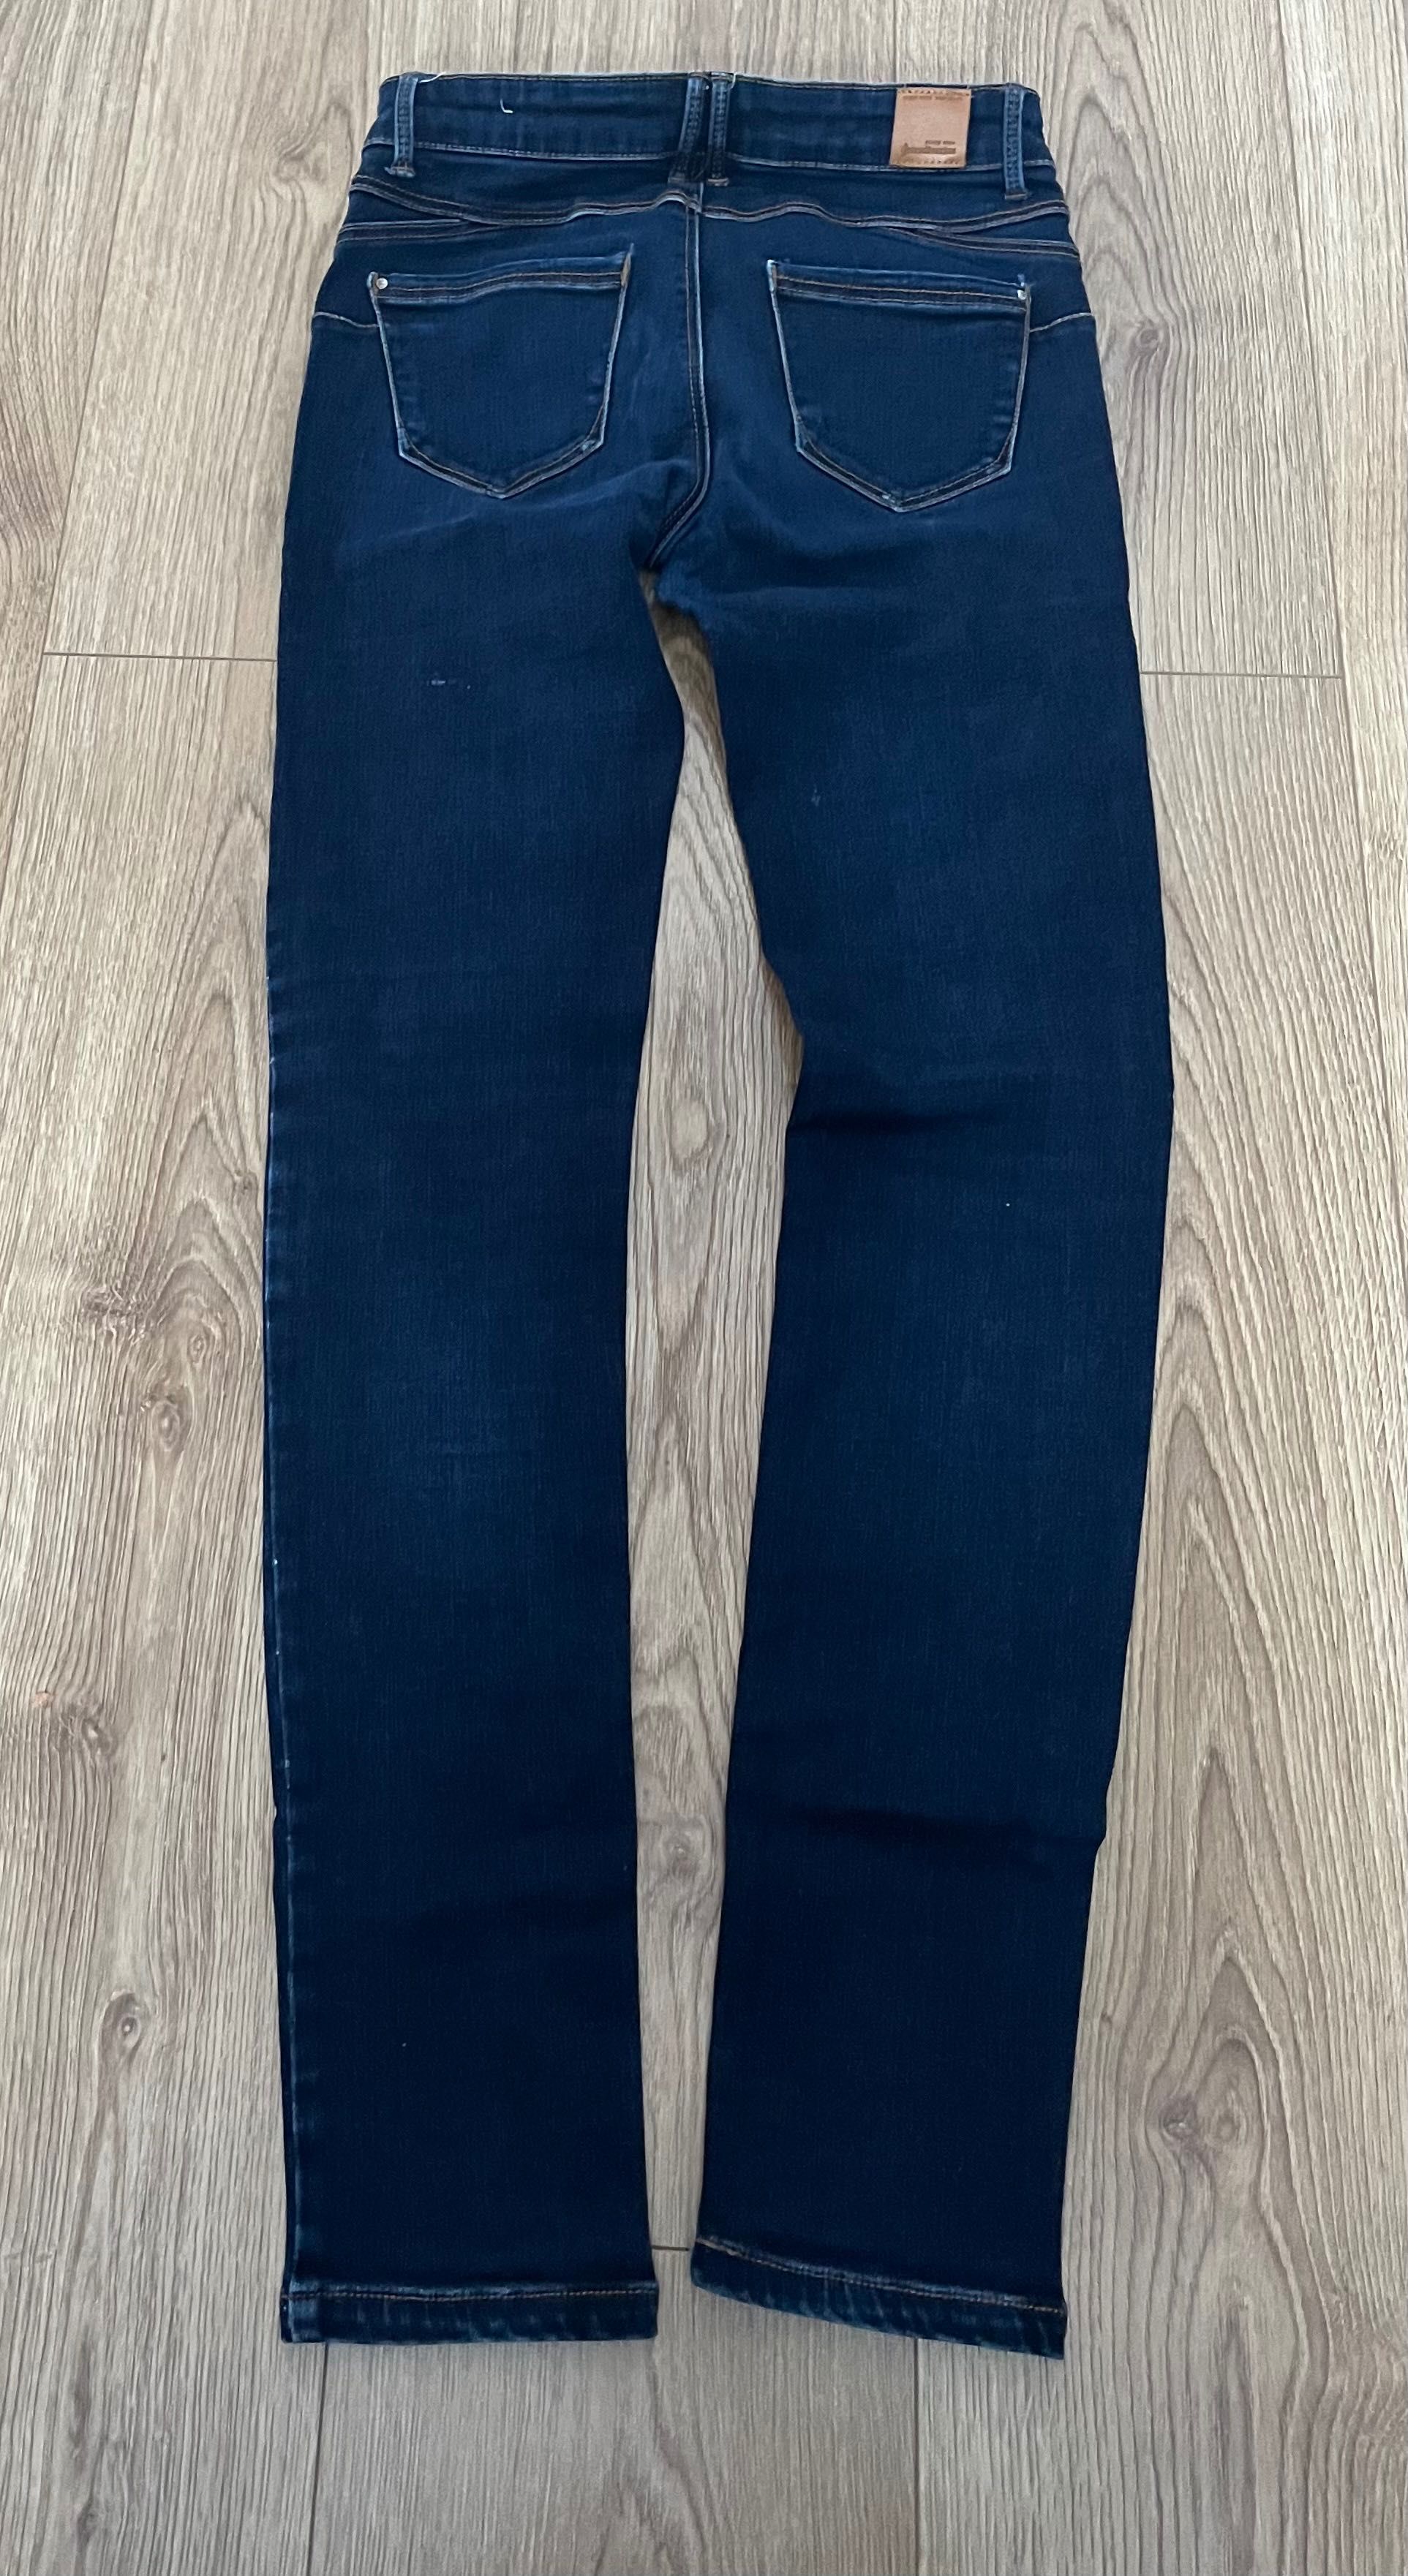 Spodnie jeans Stradivarius granatowe, polecam